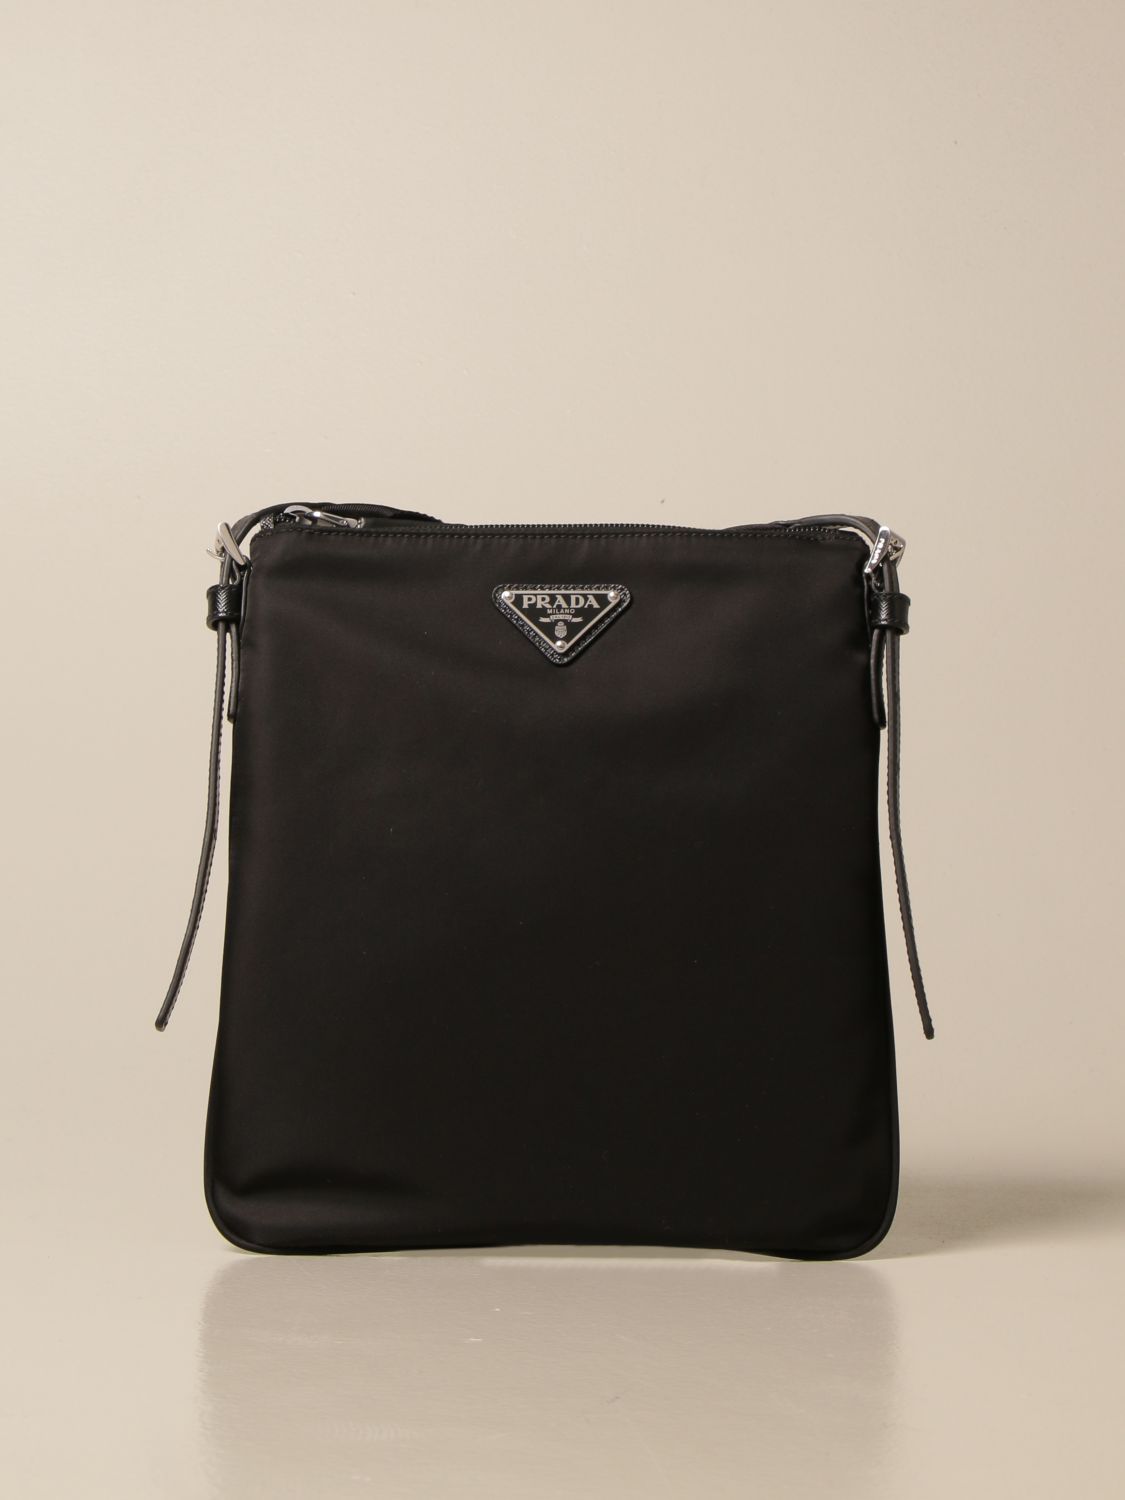 PRADA: nylon bag with triangular rubber logo - Black  Prada shoulder bag  2VH112 2DKO online at